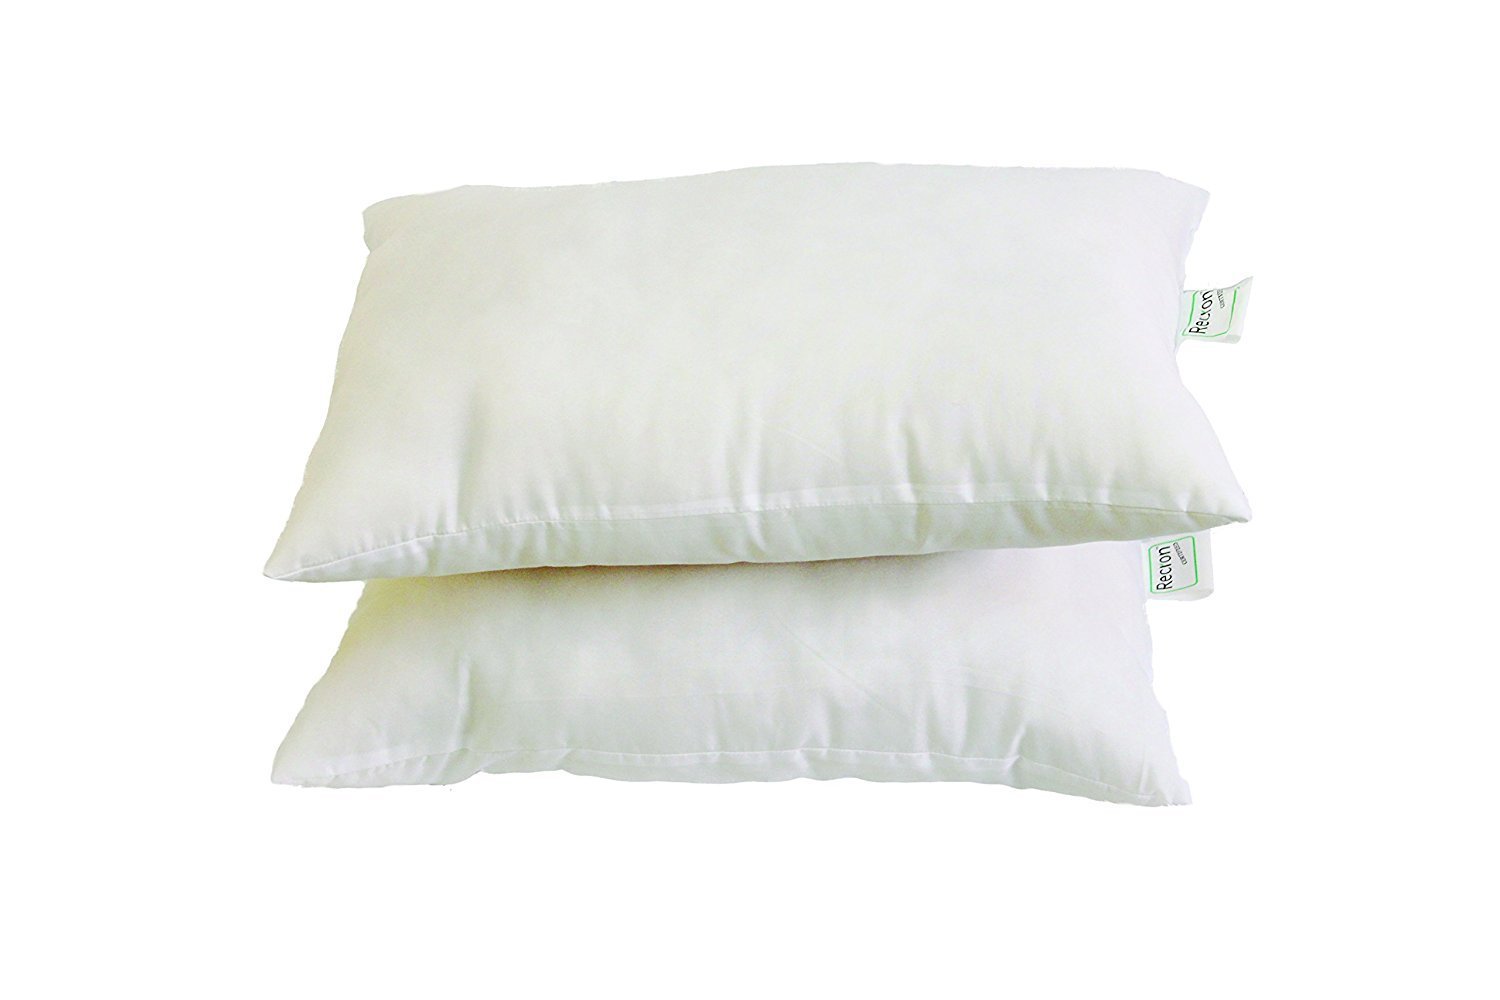 Recron Fiber Dream Pillow - 40 x 61 cm, White, 2 Piece Price in India